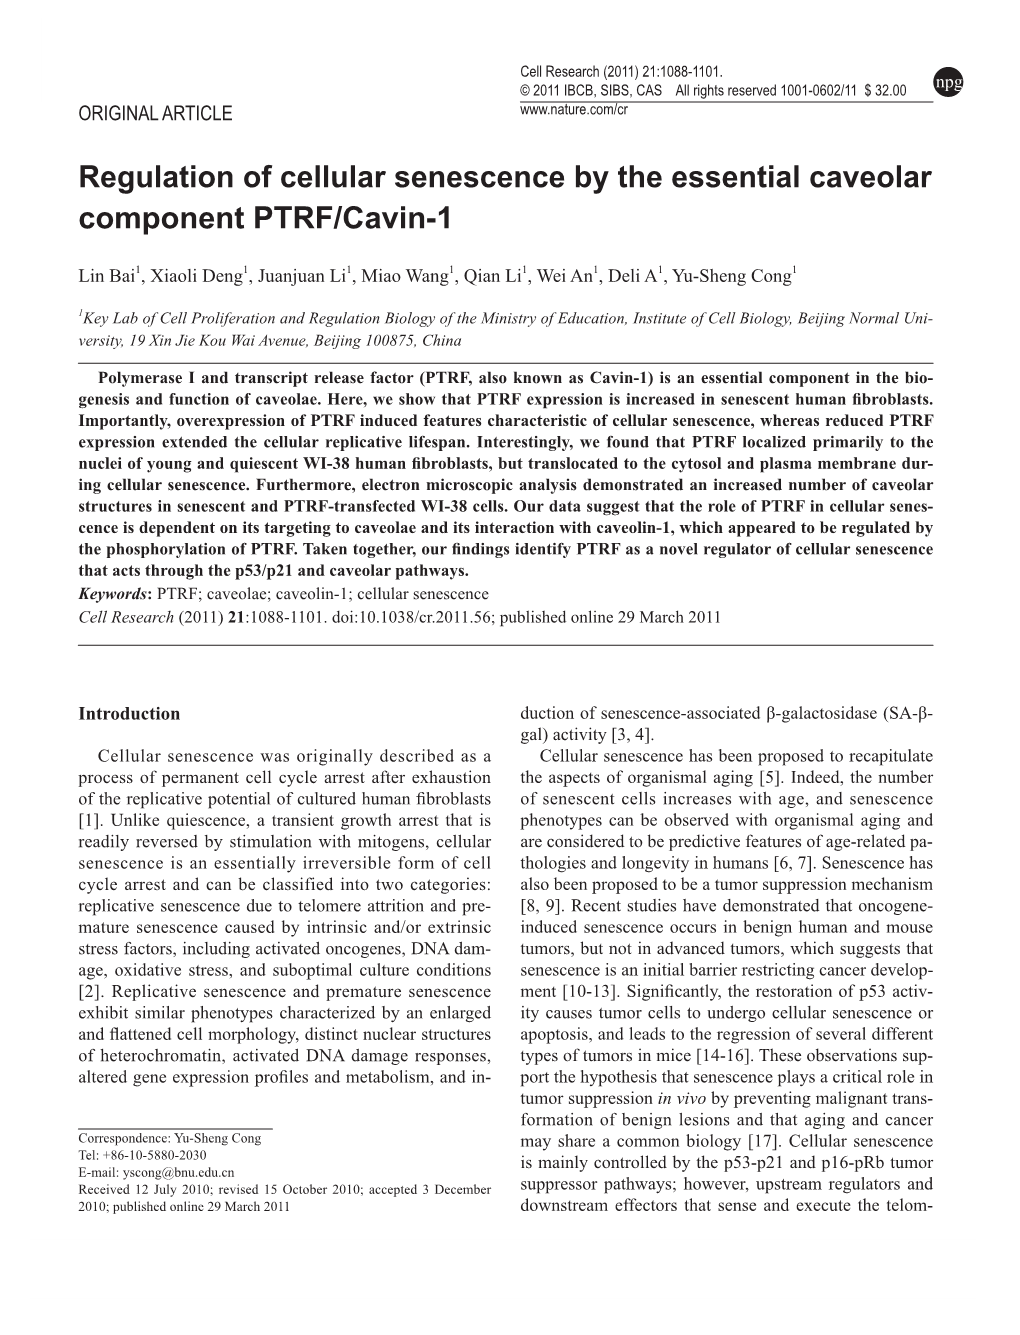 Regulation of Cellular Senescence by the Essential Caveolar Component PTRF/Cavin-1